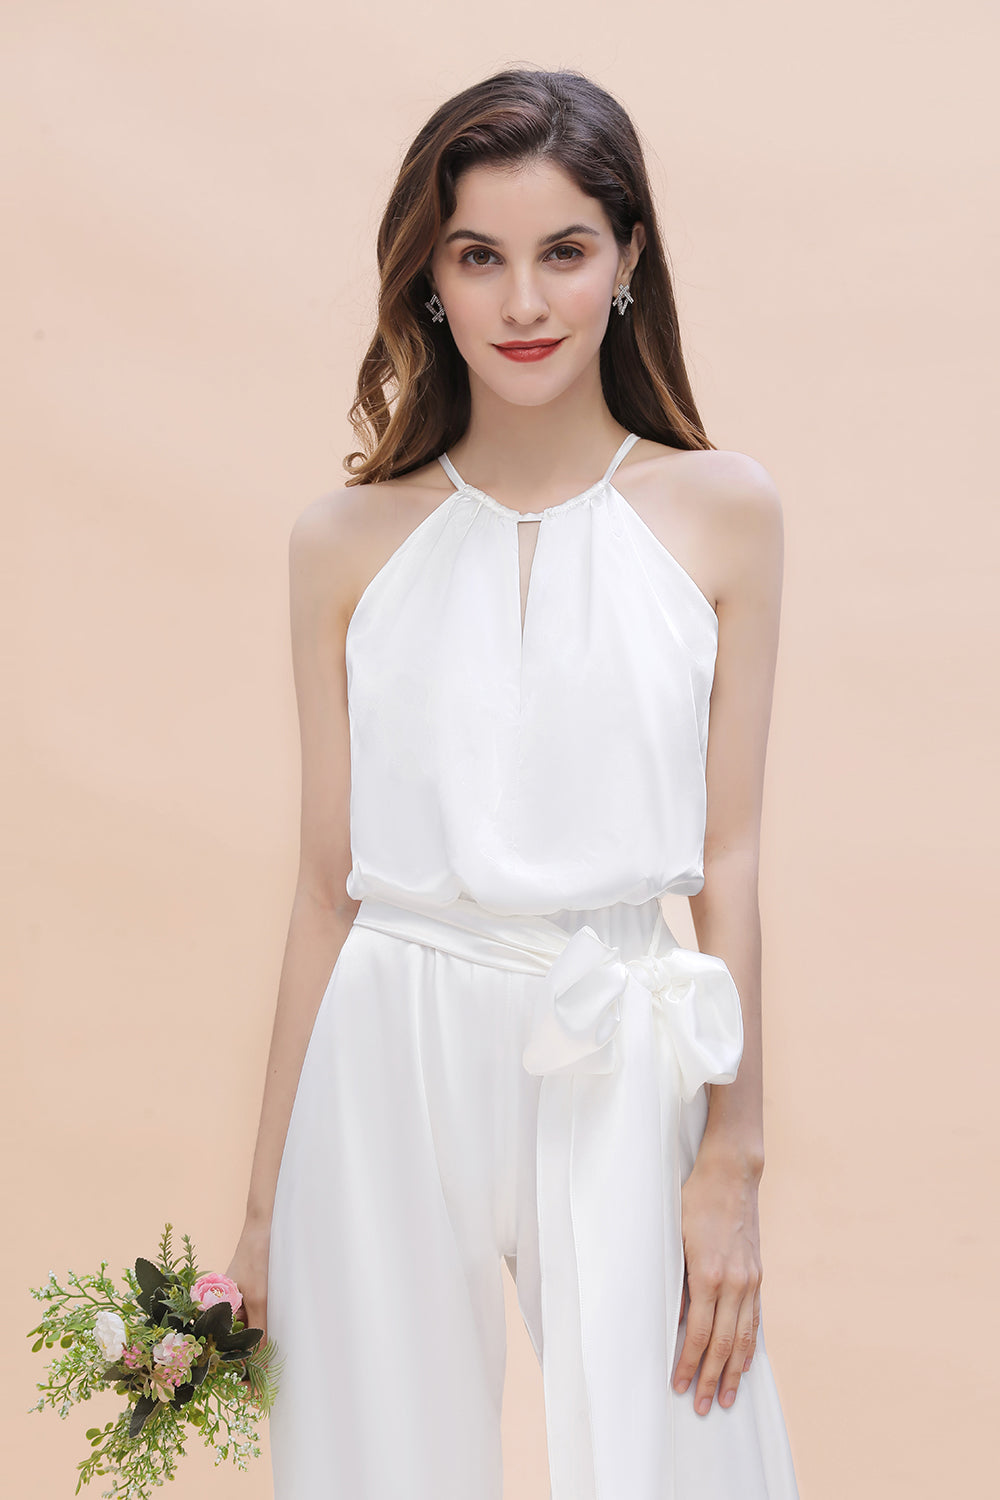 Affordable Halter Sleeveless Ivory Charmeuse Bridesmaid Jumpsuit Online-27dress